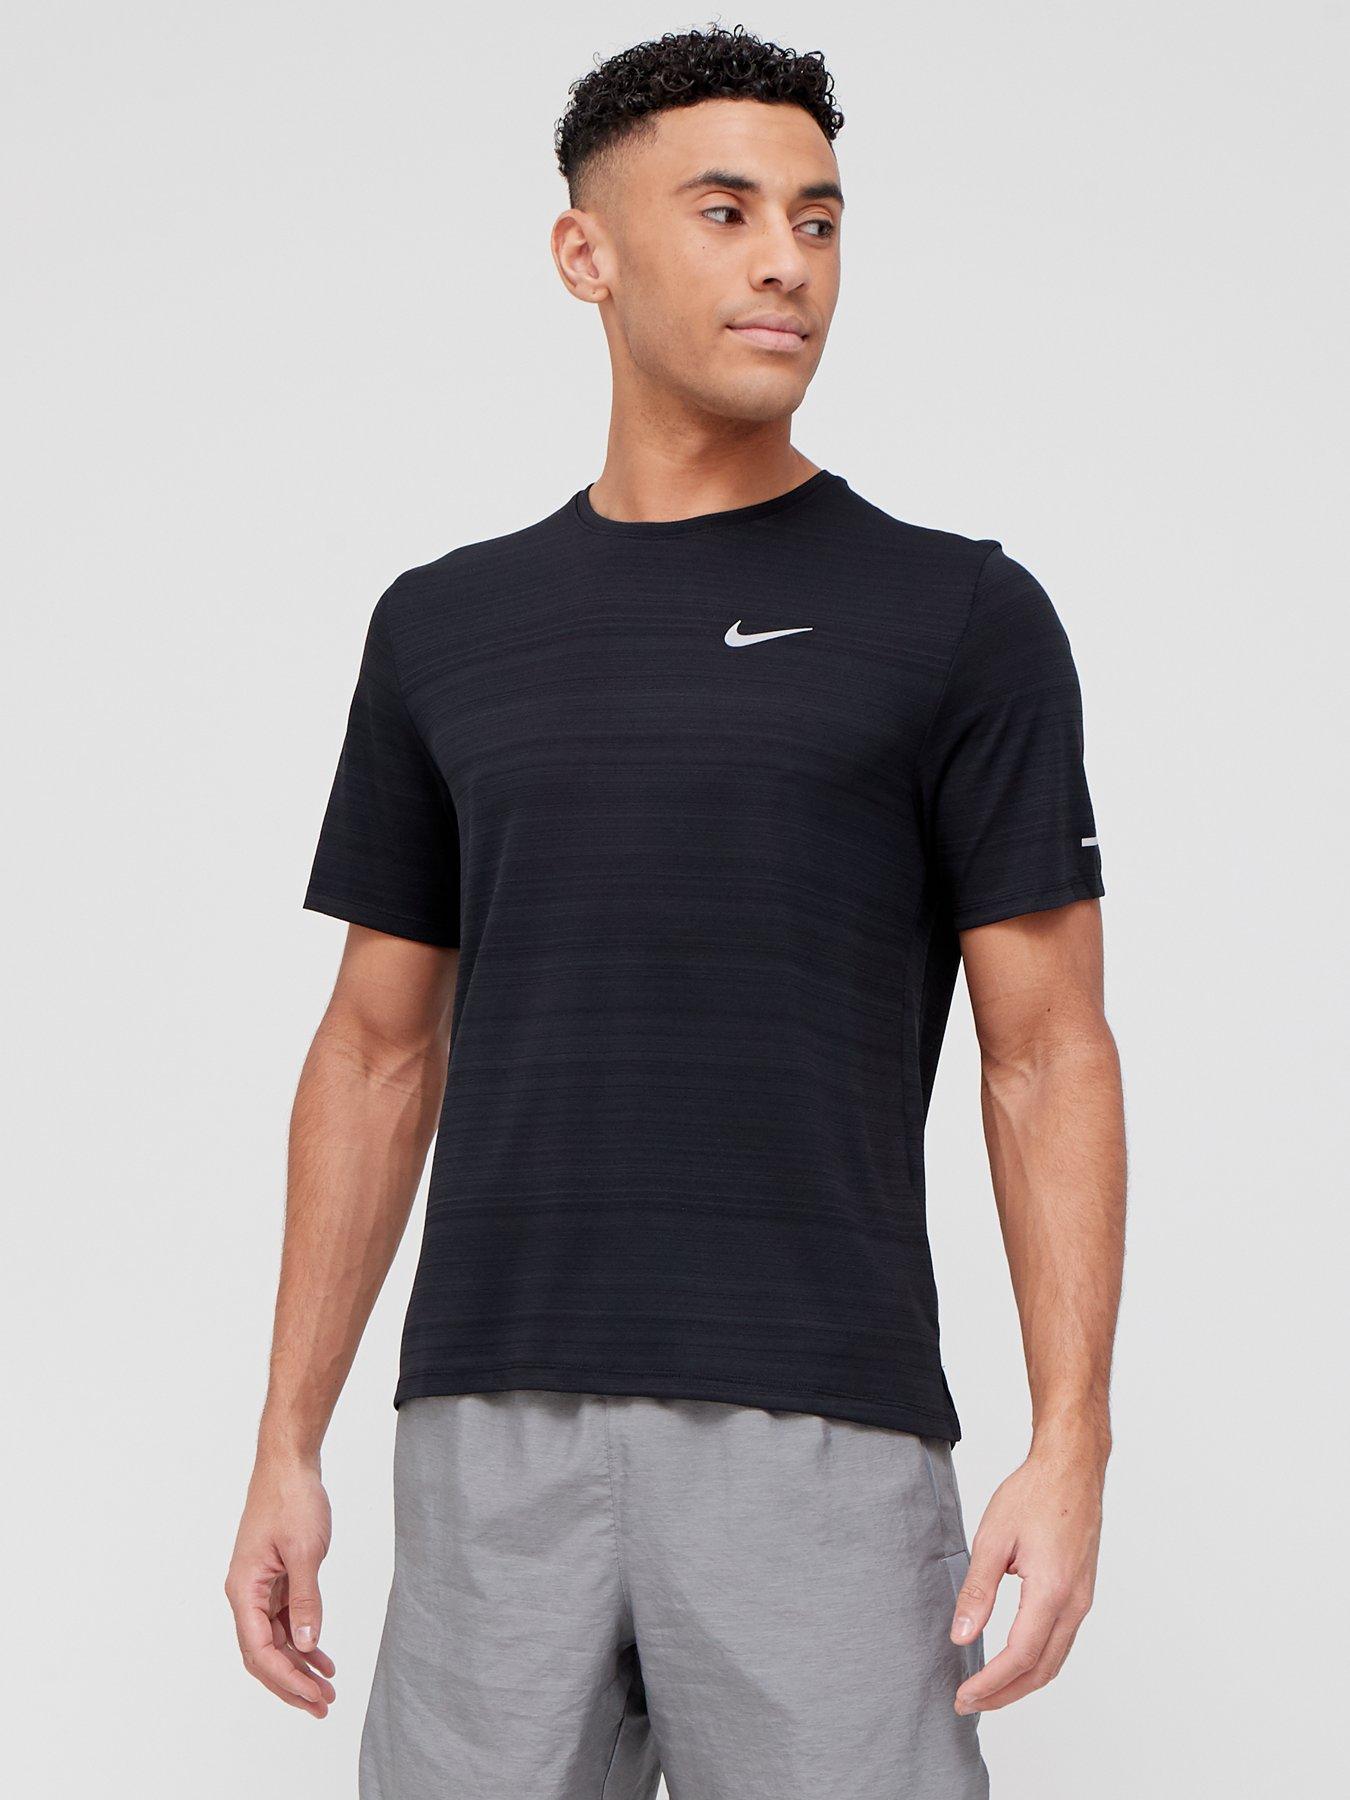 Nike Miler Running Top - Black | very.co.uk